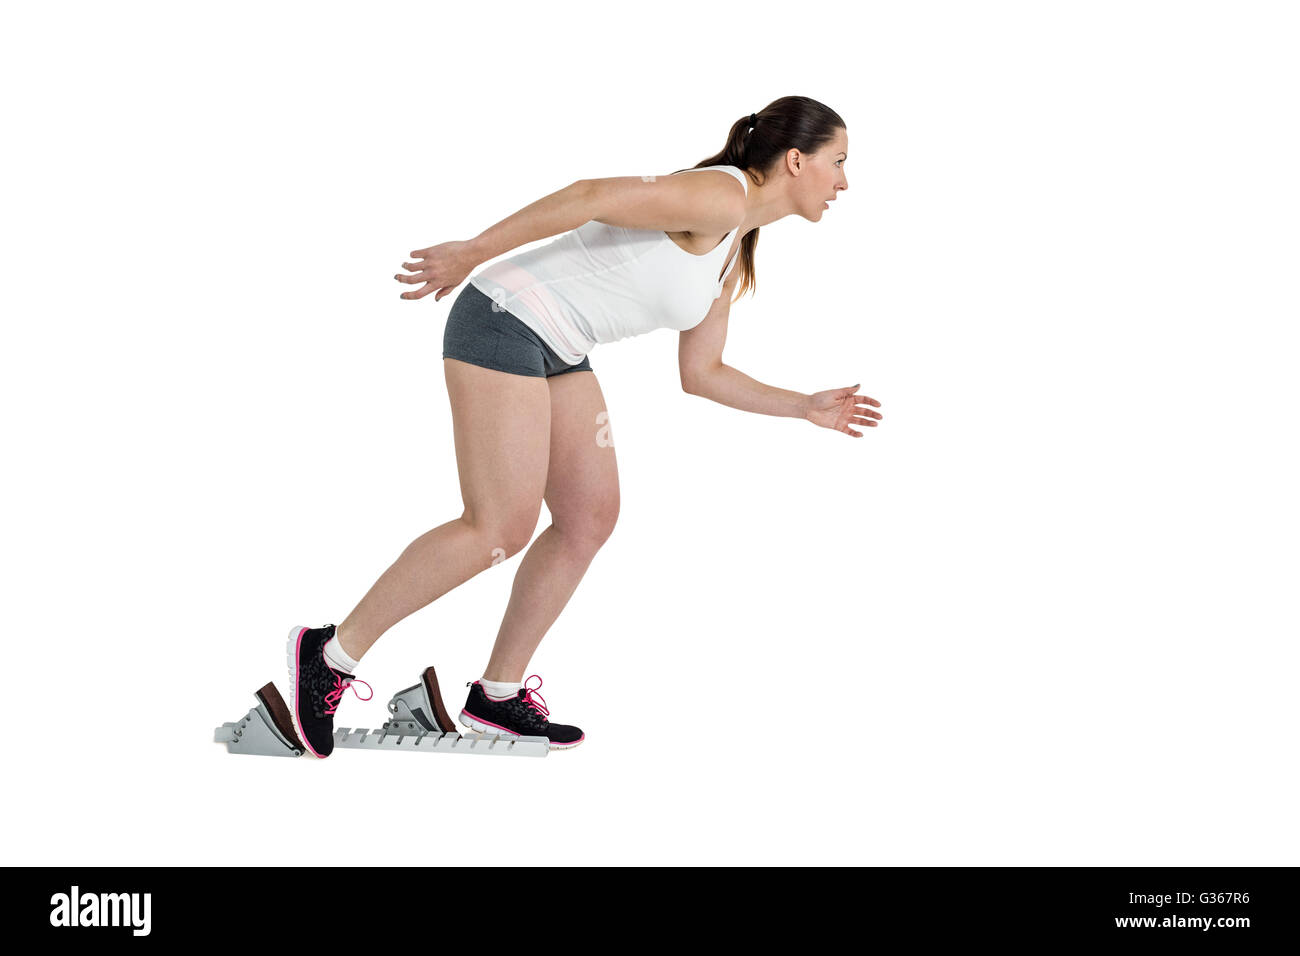 Confident athlete woman running from starting blocks Stock Photo